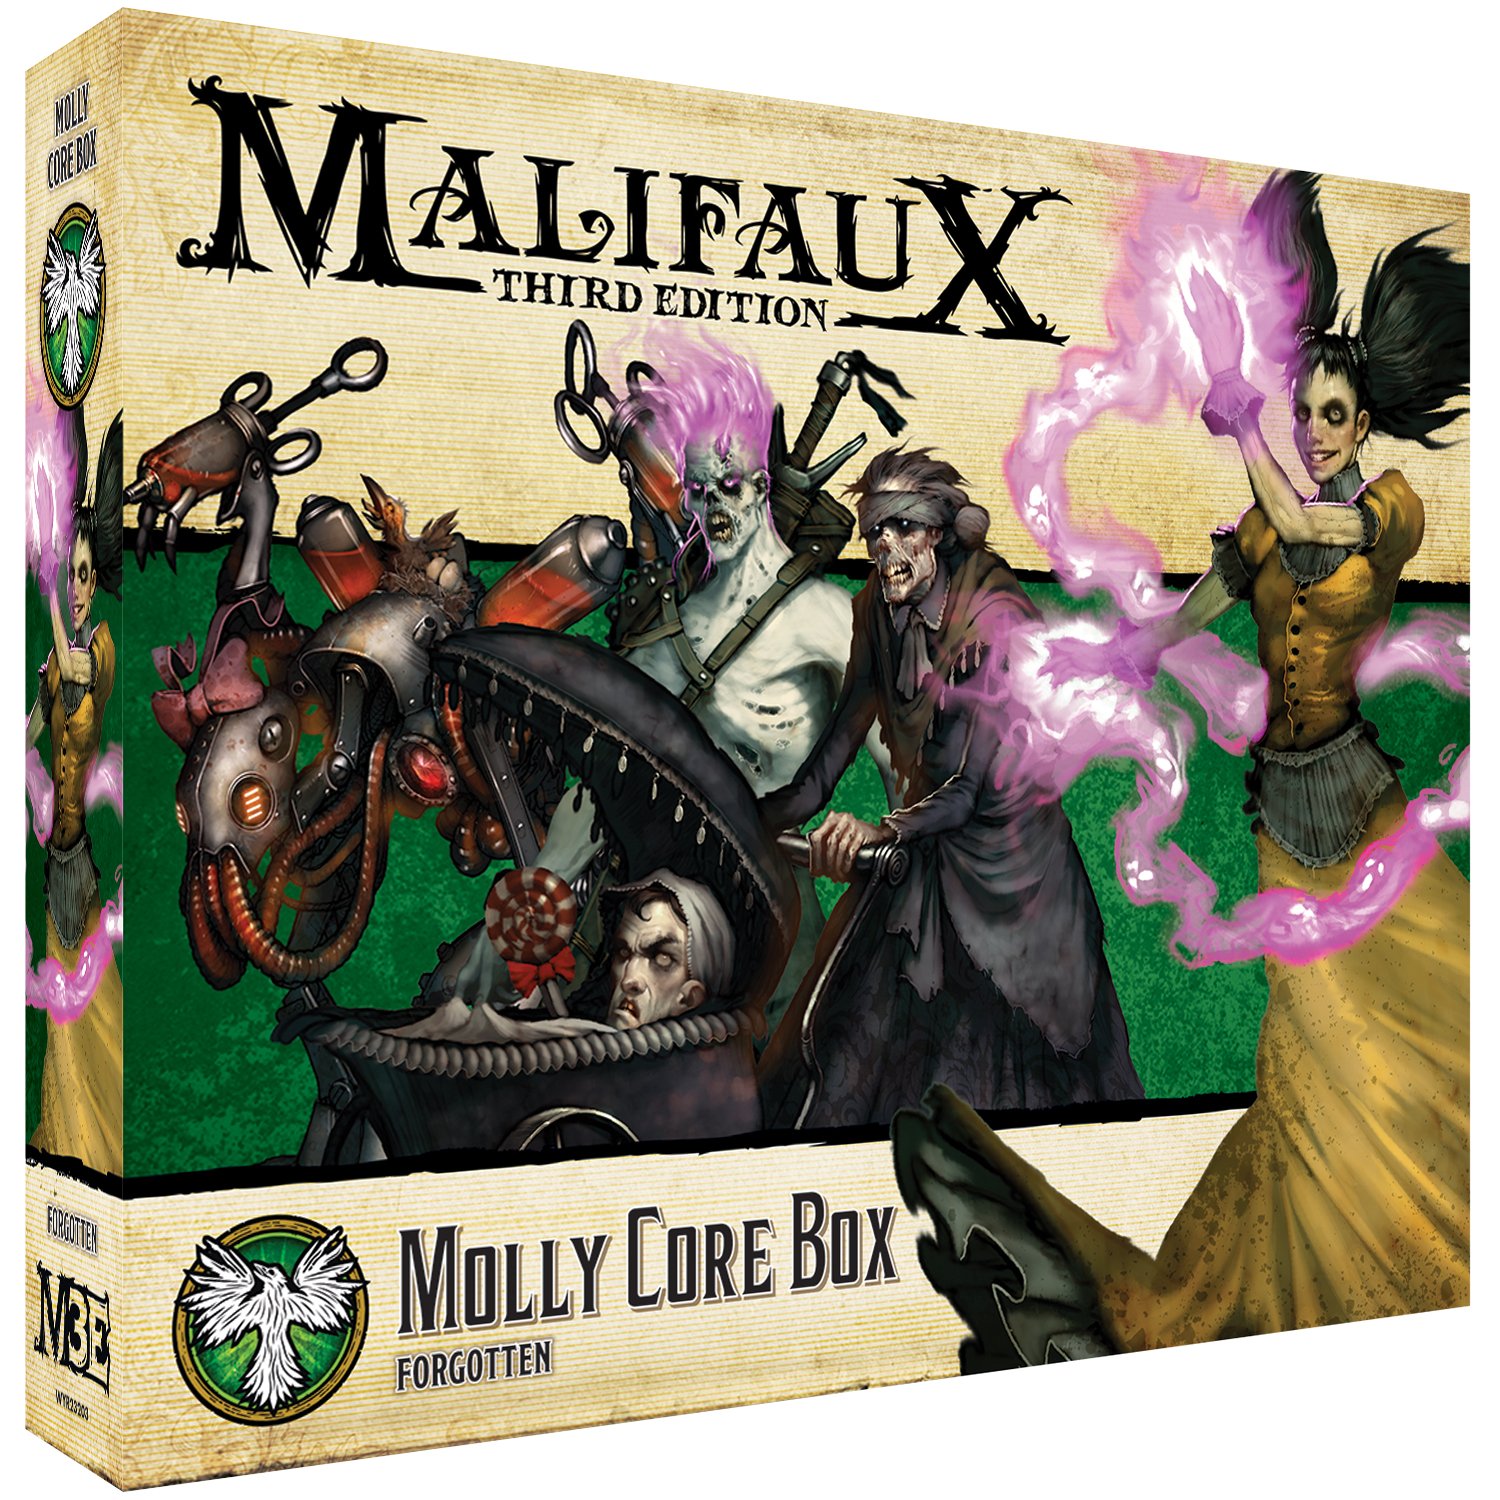 molly core box front of box